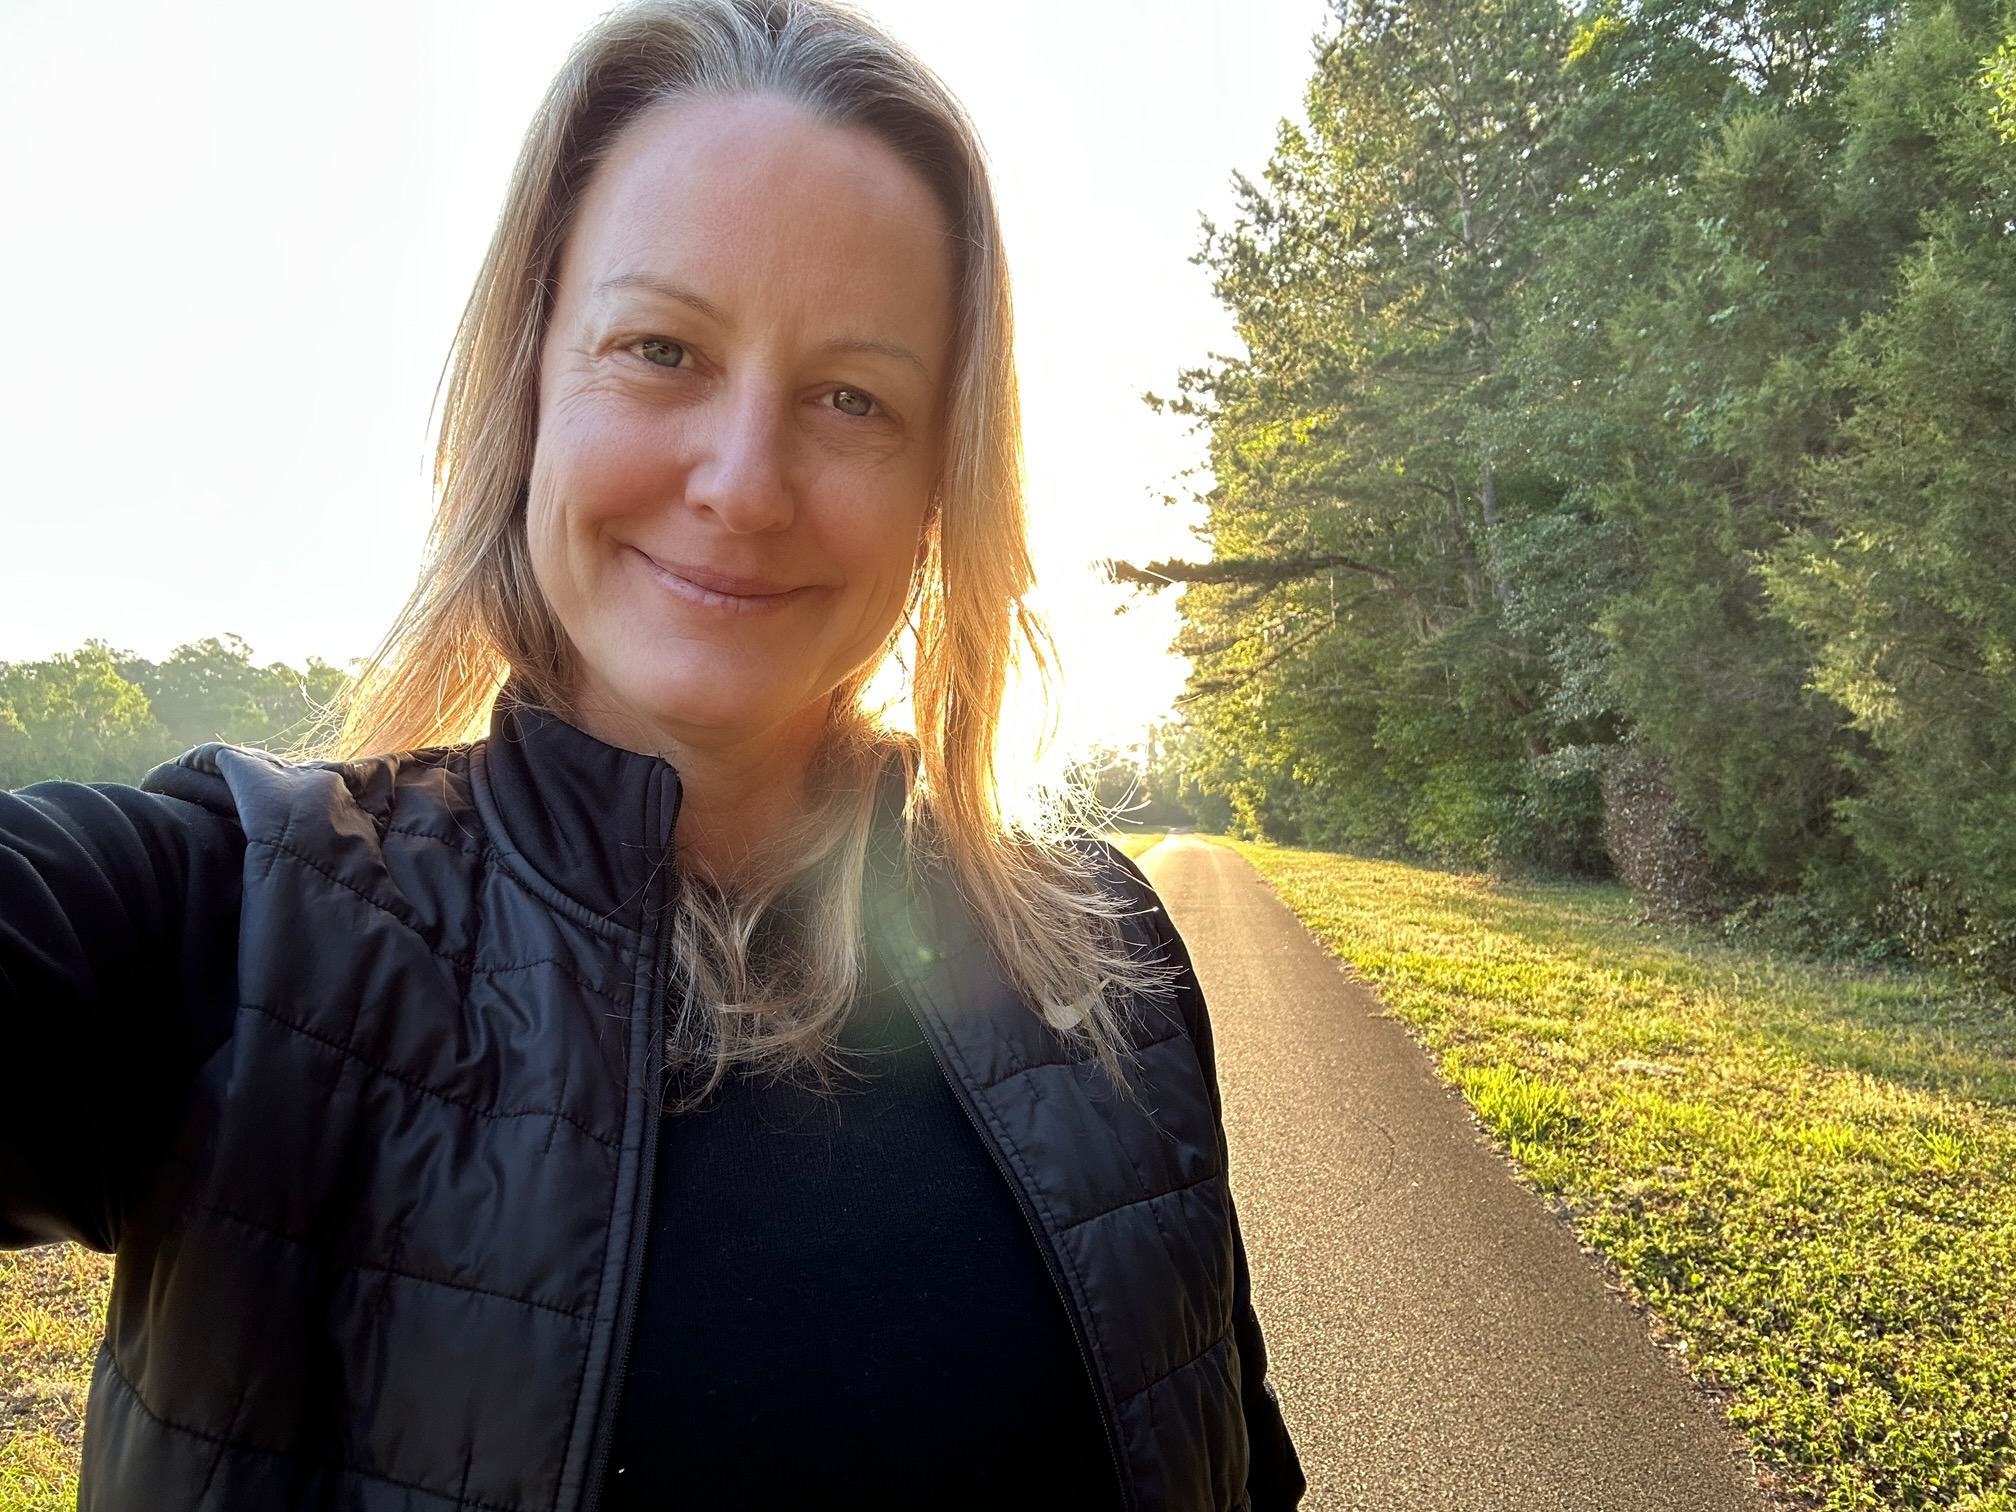 Elizabeth Winkler taking photo of herself on a sunny path